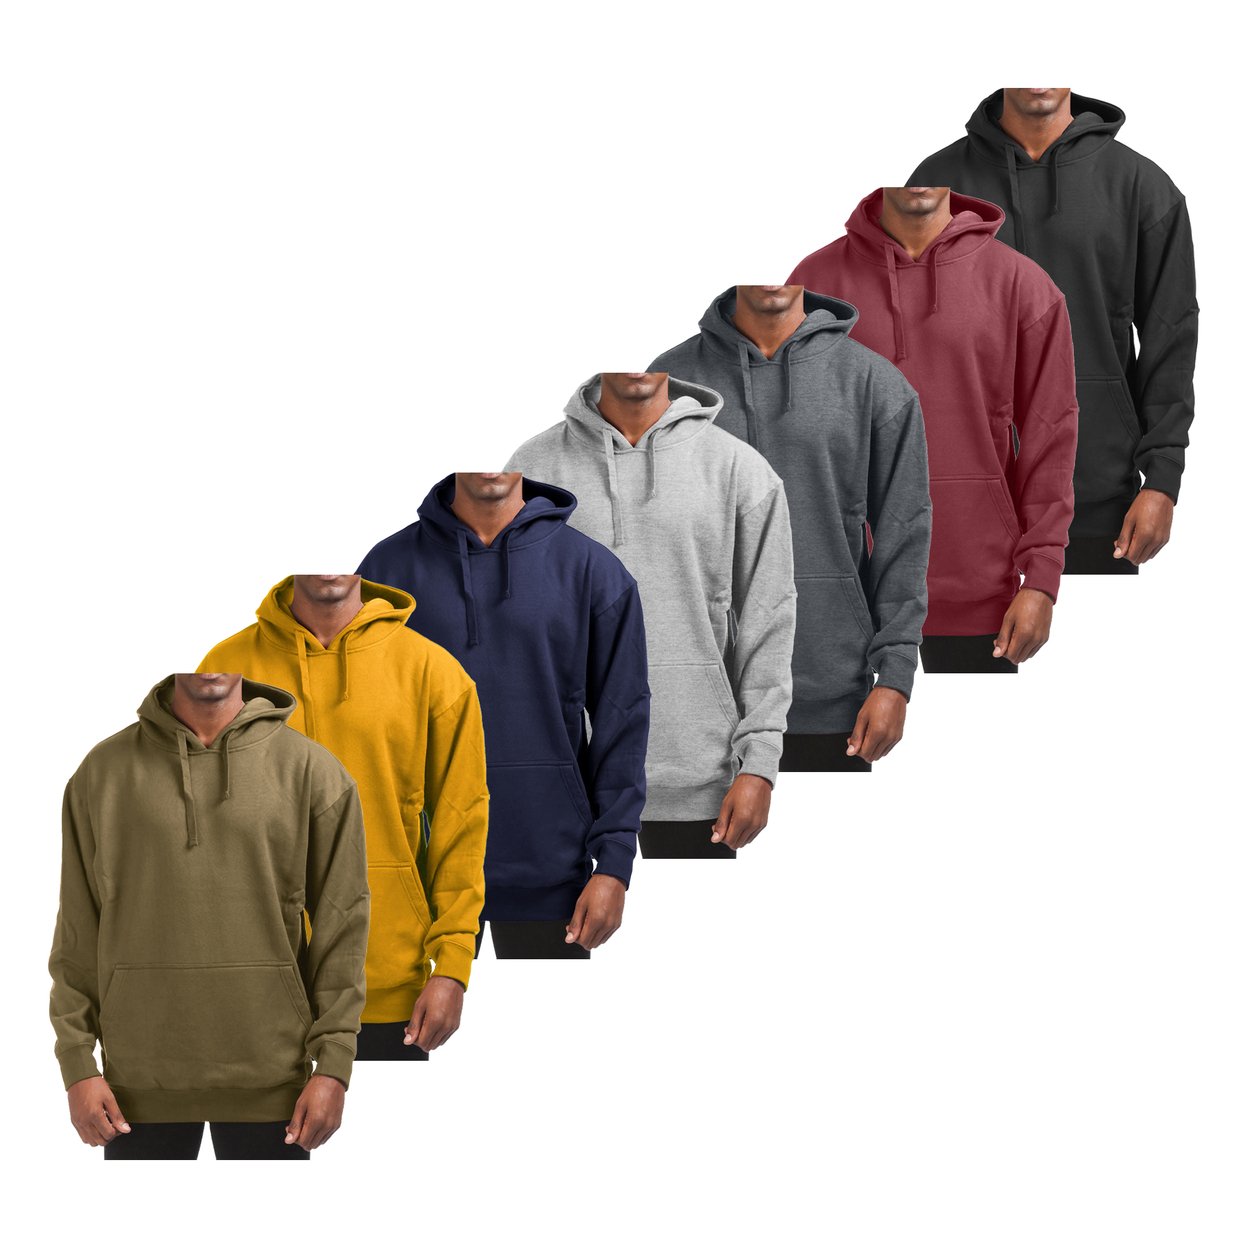 2-Pack: Men's Super-Soft Winter Warm Cotton-Blend Fleece Pullover Hoodie With Kangaroo Pocket - Black & Charcoal, 3x-large